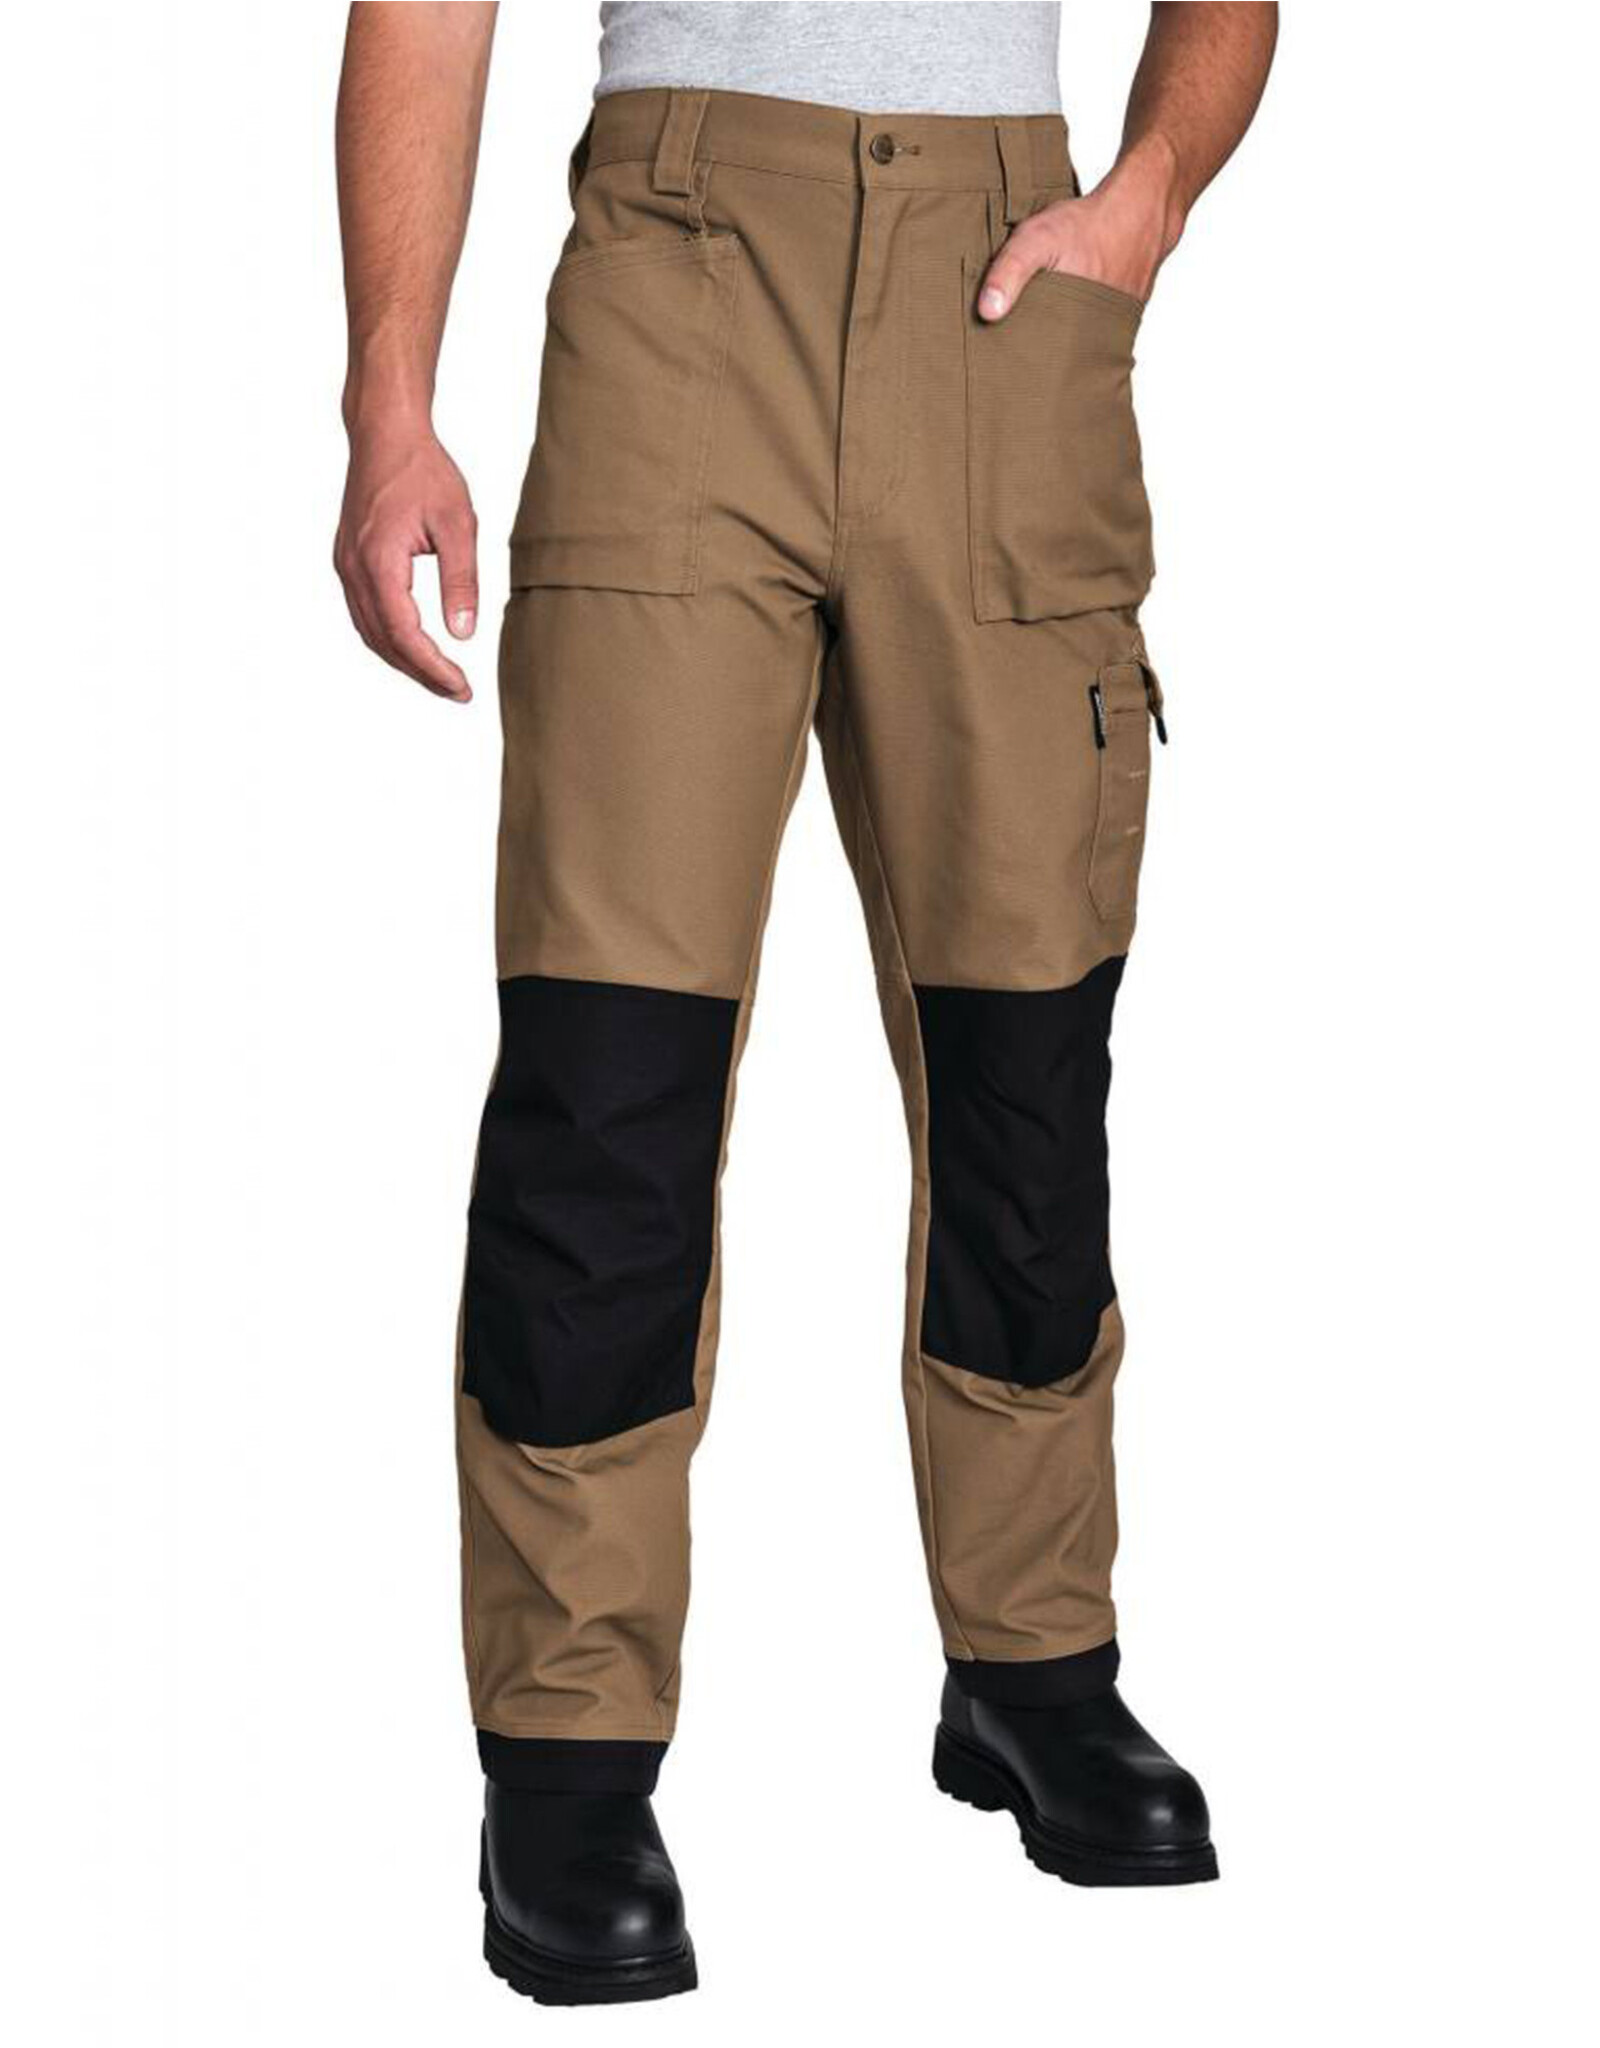 DICKIES Eisenhower Multi-Pocket Pant Khaki - EH26800KH